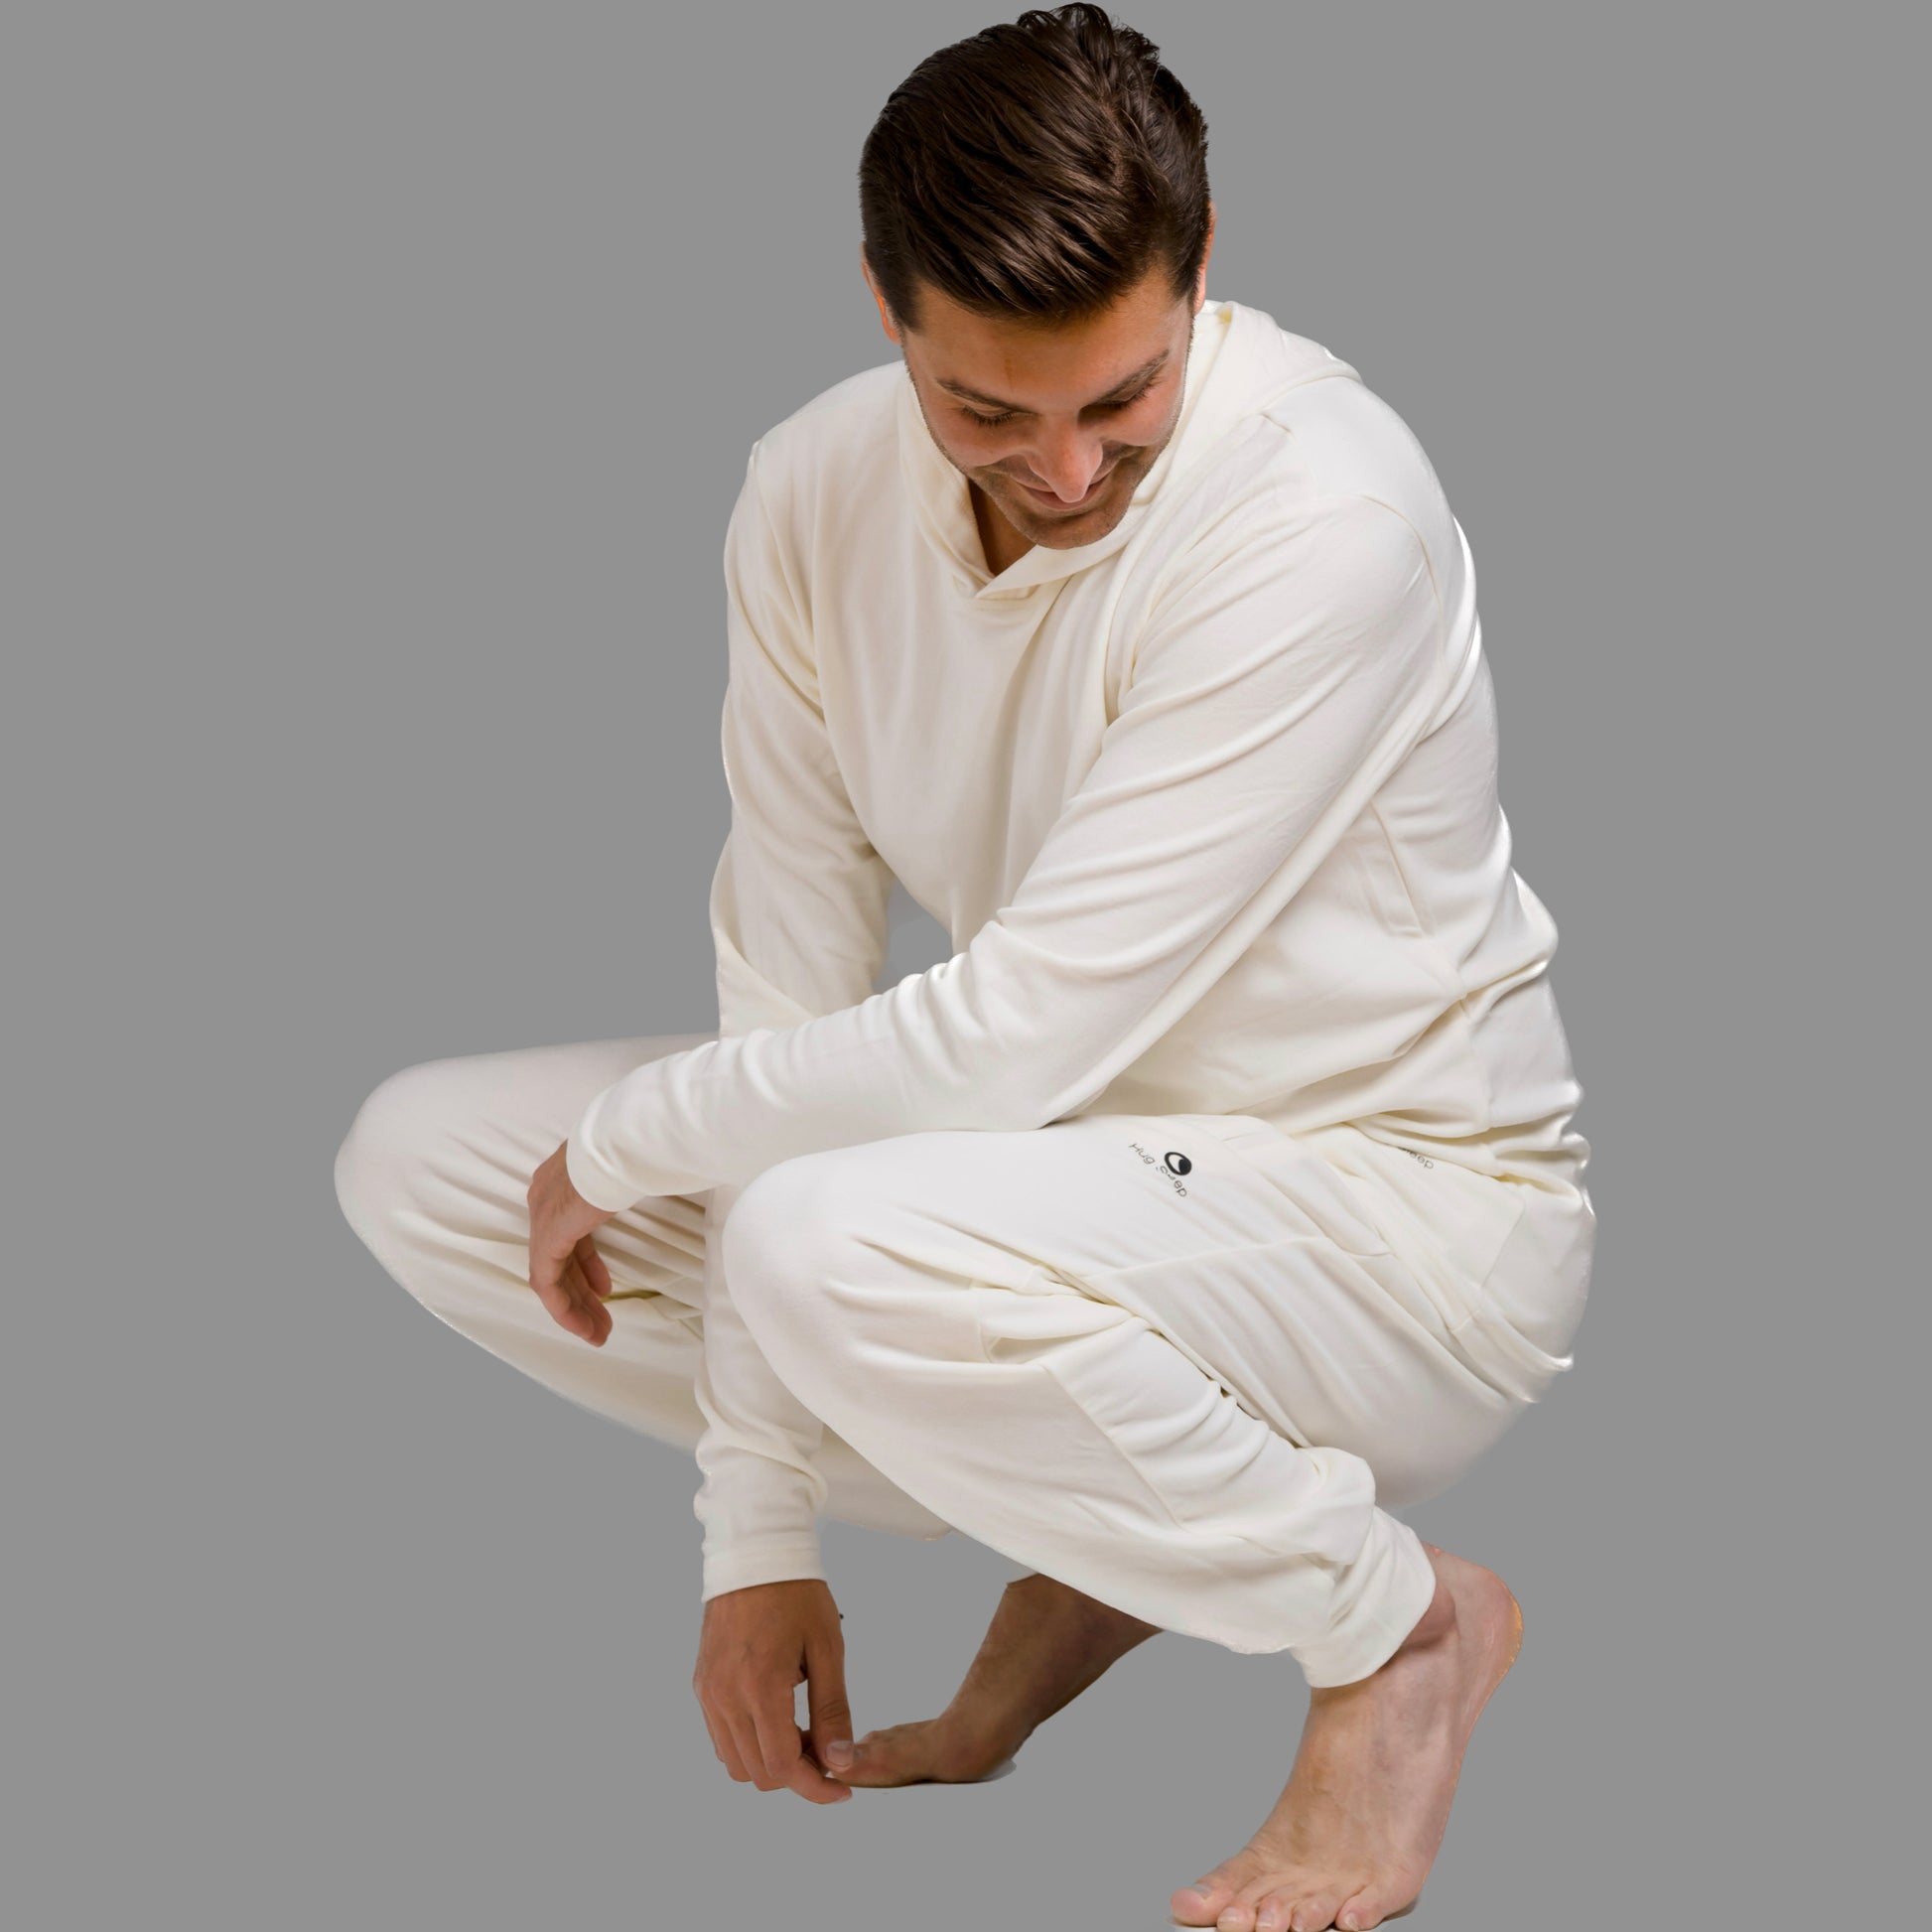 man squatting down wearing hug sleep loungewear in cream cream